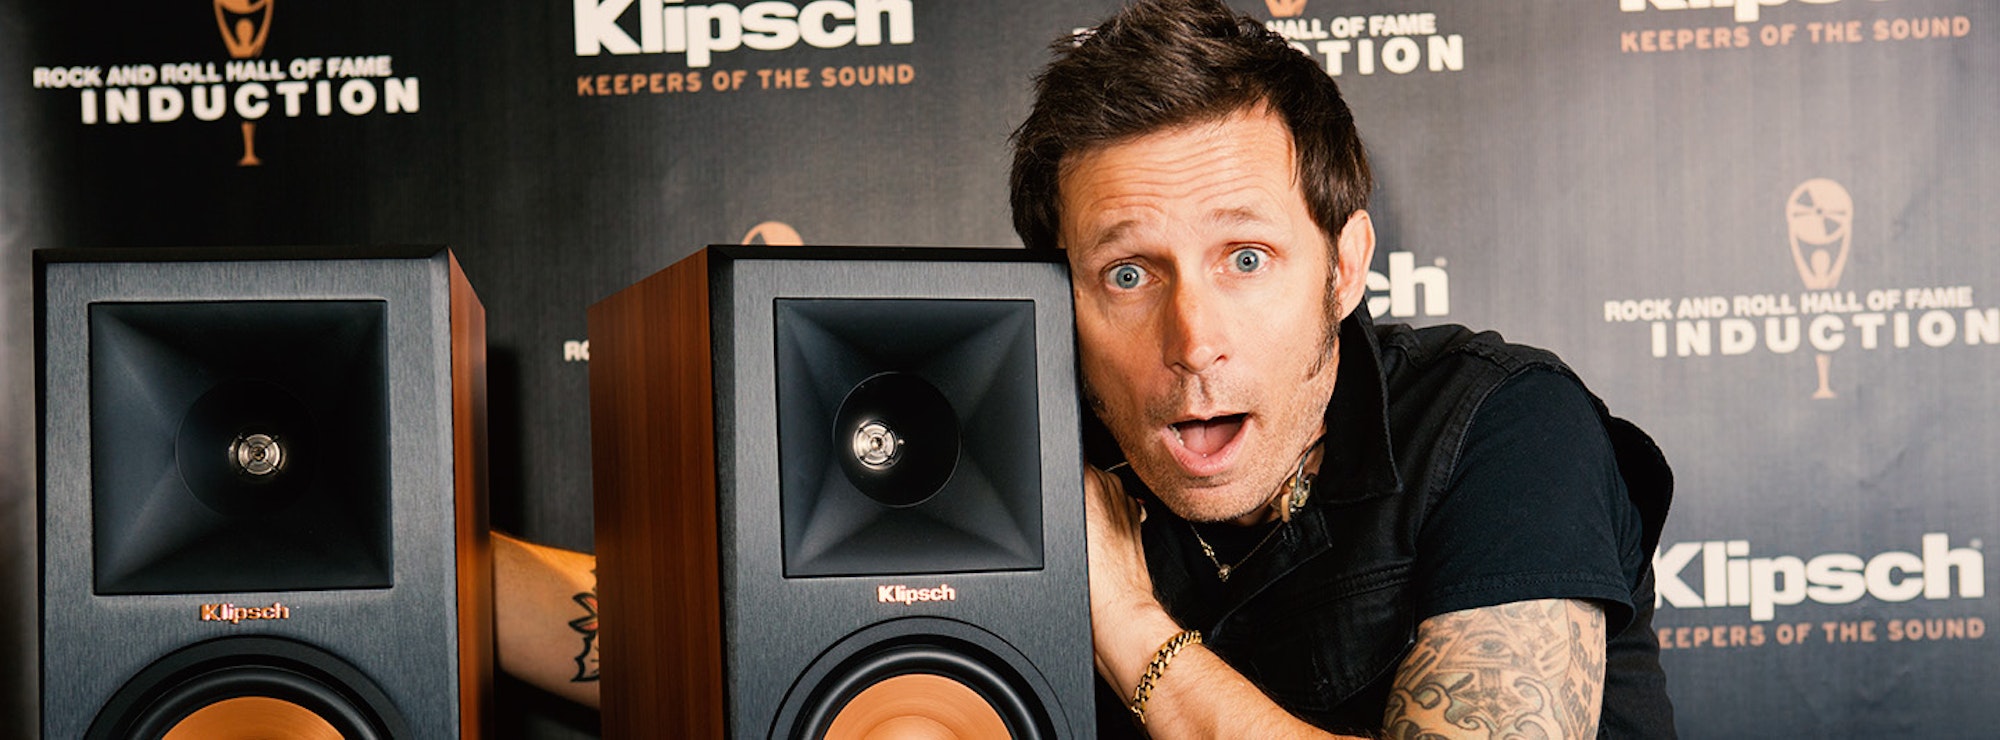 Mike Dirnt with Klipsch speakers